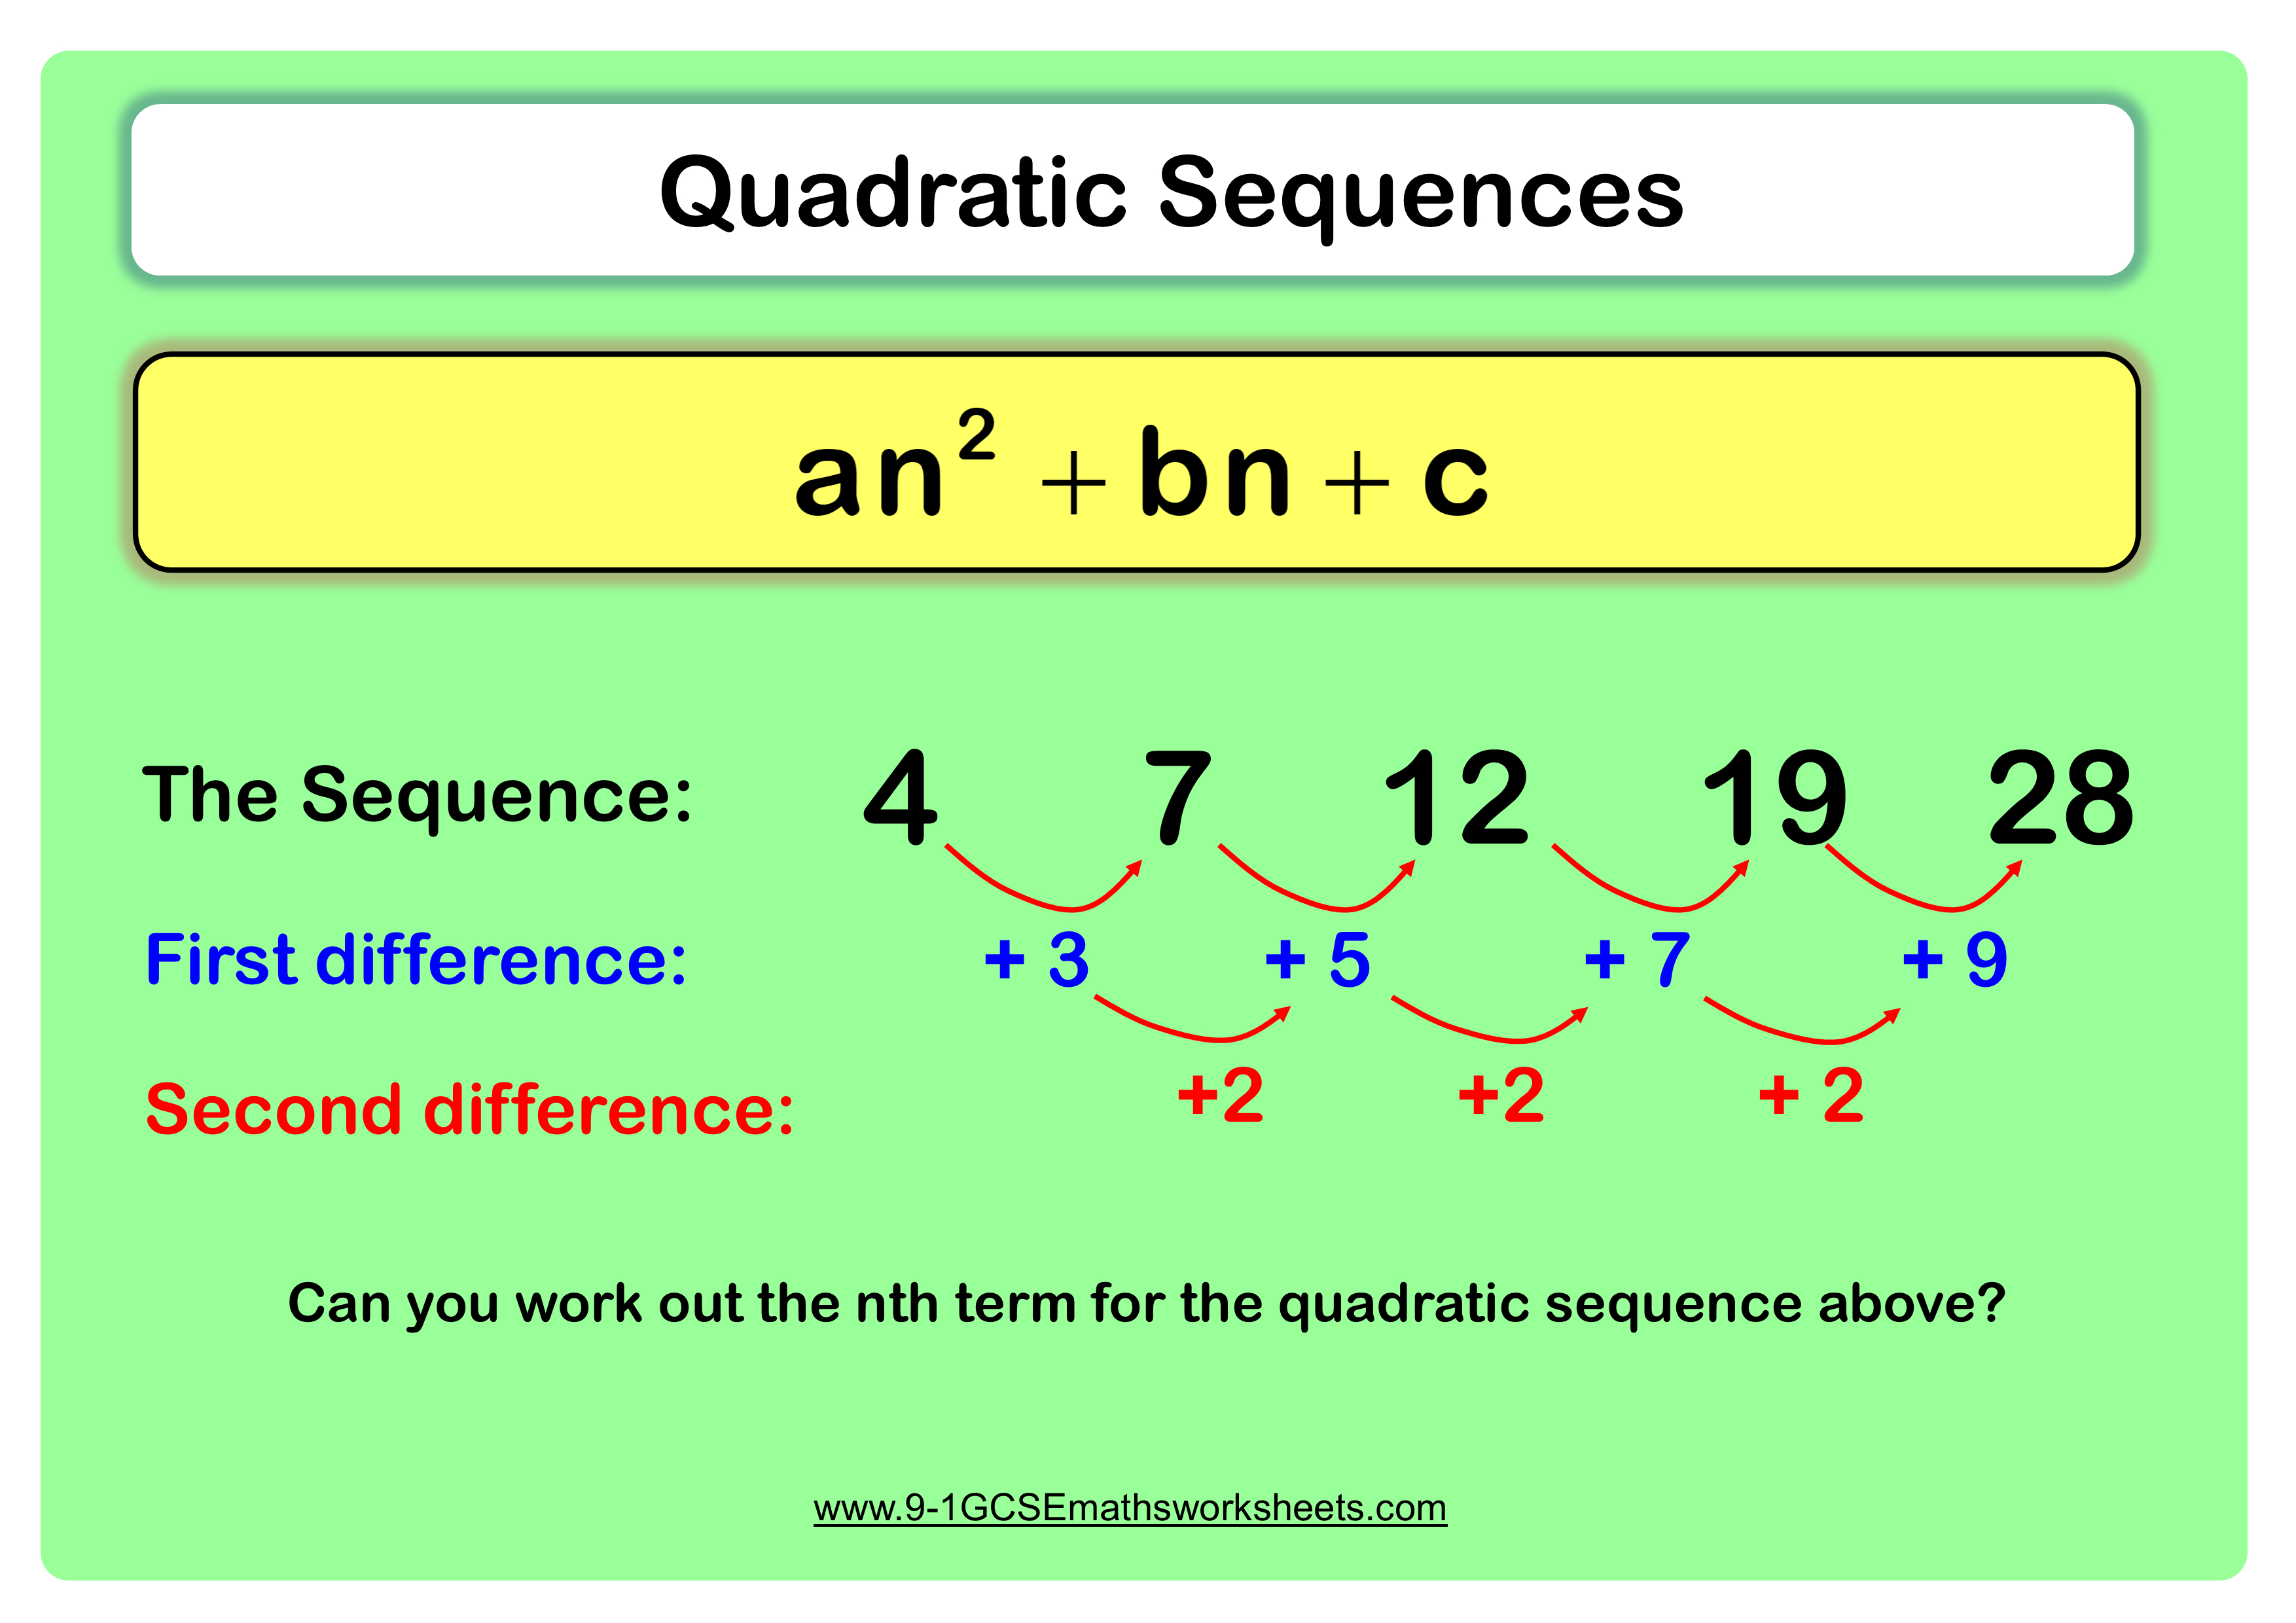 quadratic-sequences-worksheet-db-excel